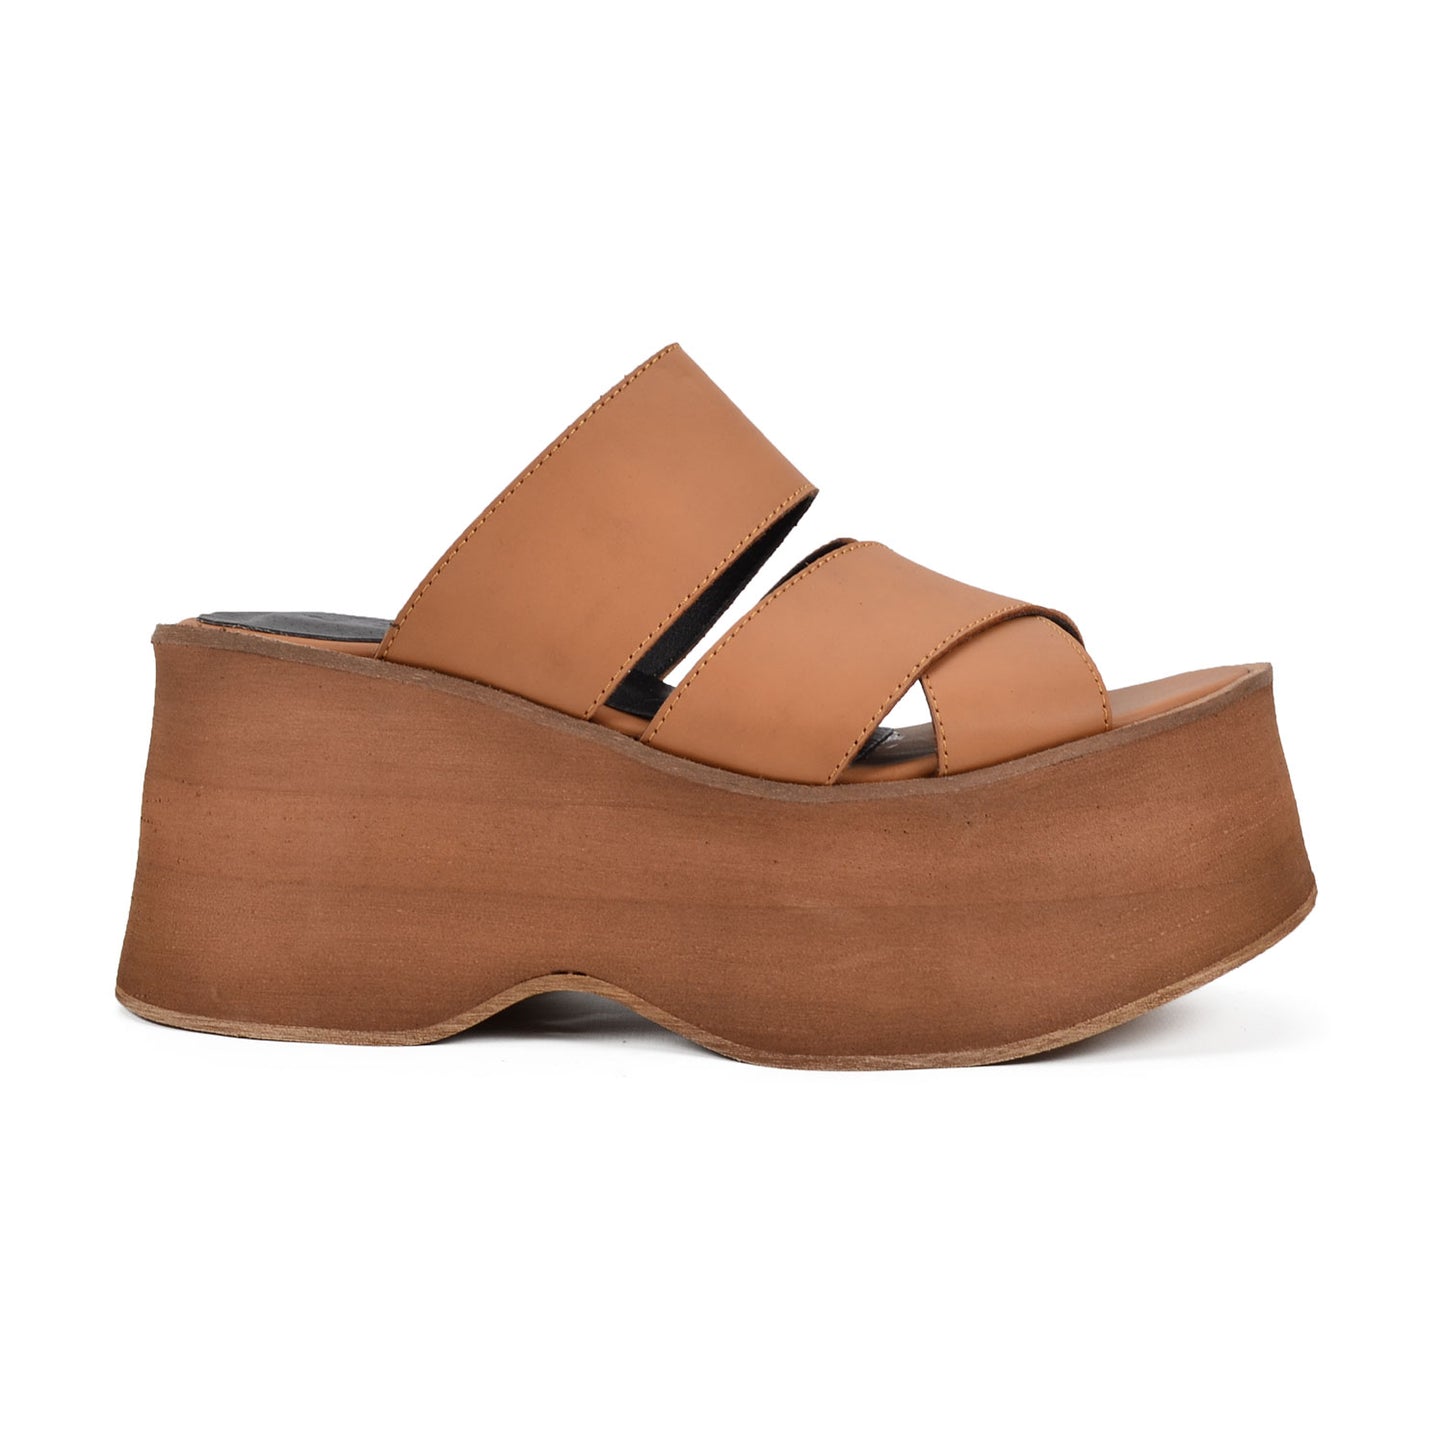 Congo Tan | Leather Slide Platform Sandals